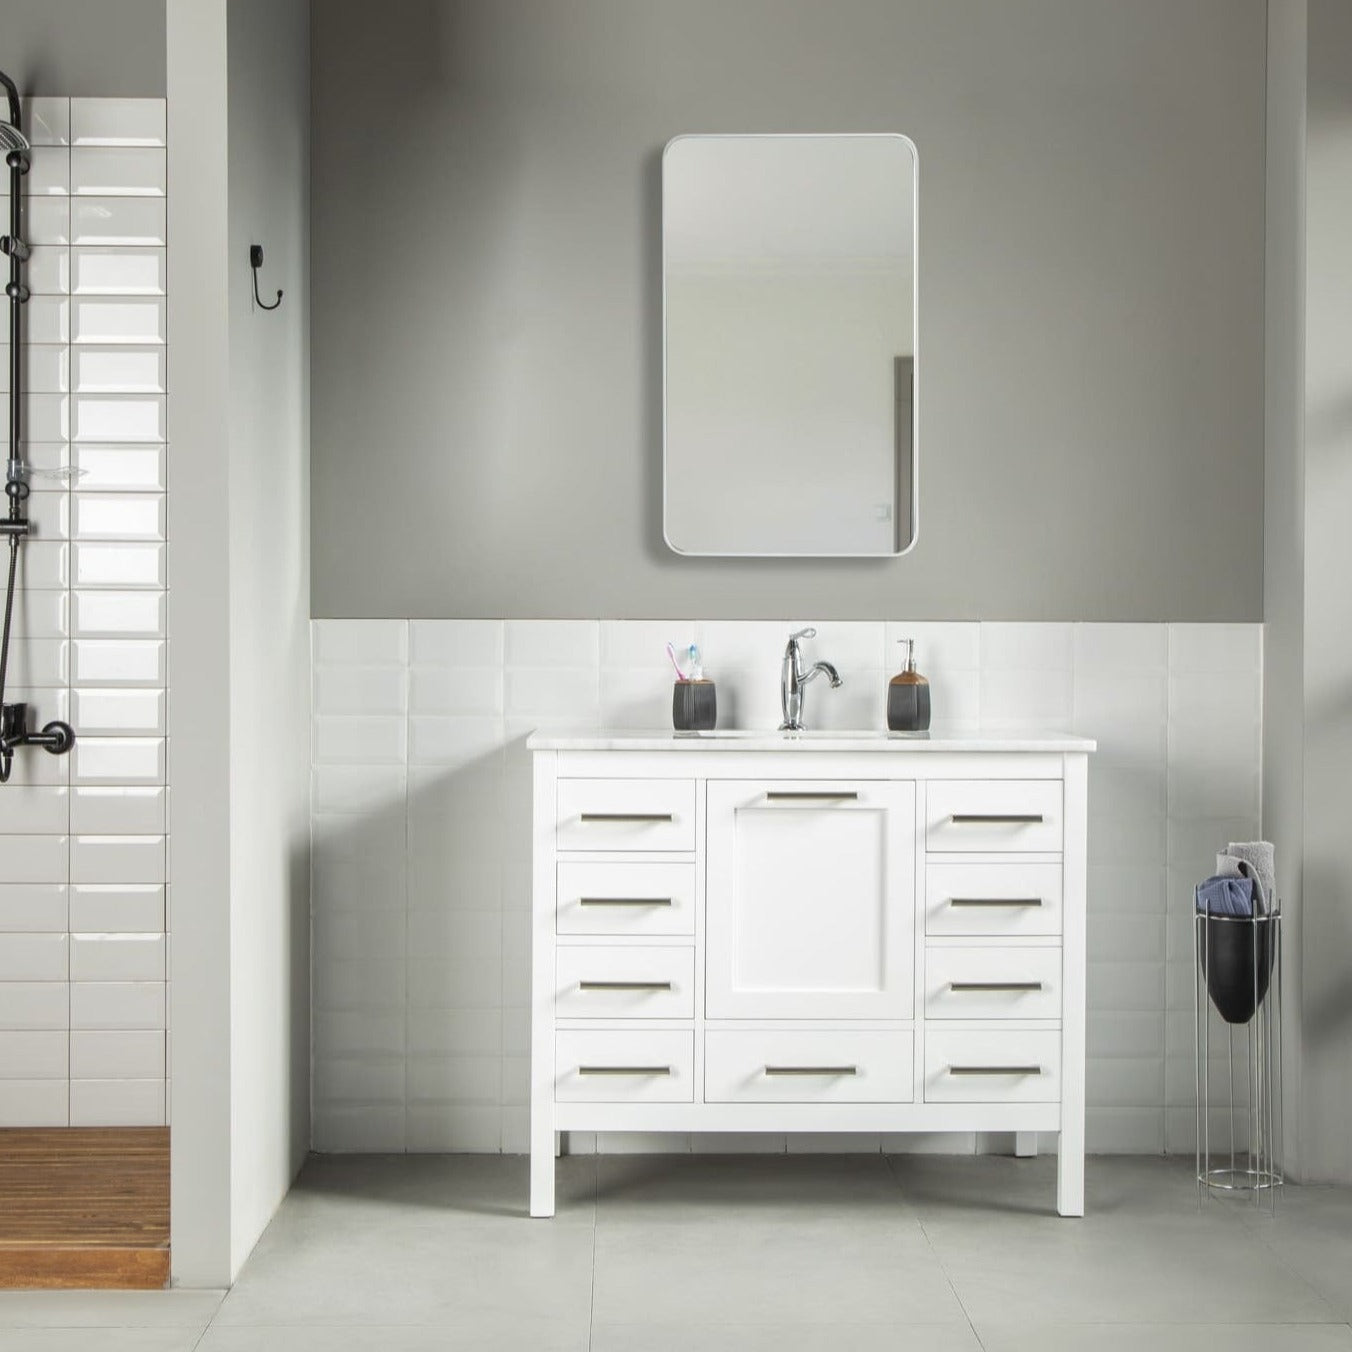 Ahley Bathroom Vanity Homelero 42"  #size_42"  #color_white  #hardware_brushed nickel